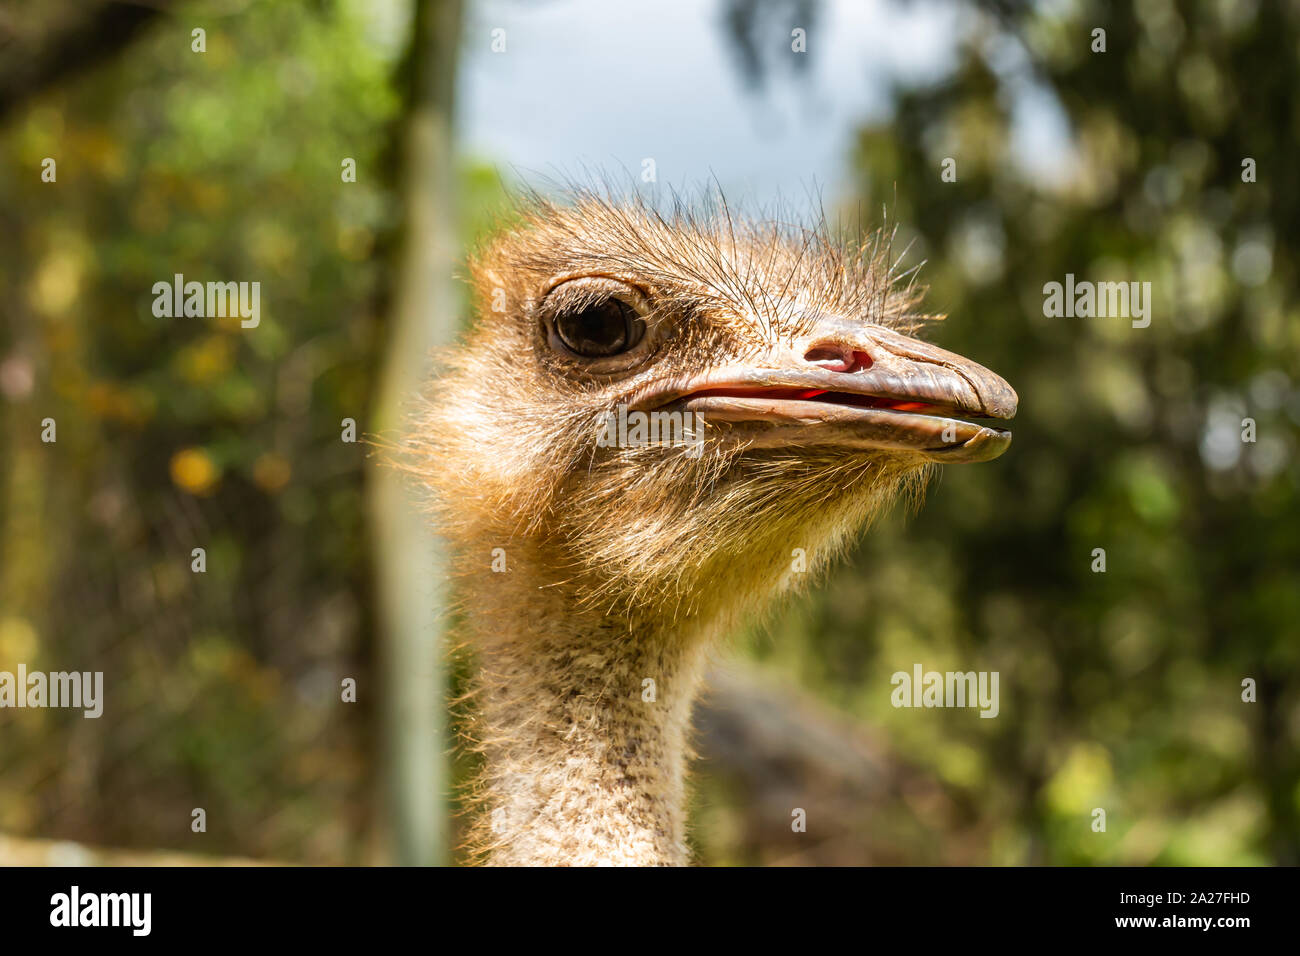 Colour portrait photograph of Ostrich head close-up, taken in Meru county, Kenya. Stock Photo